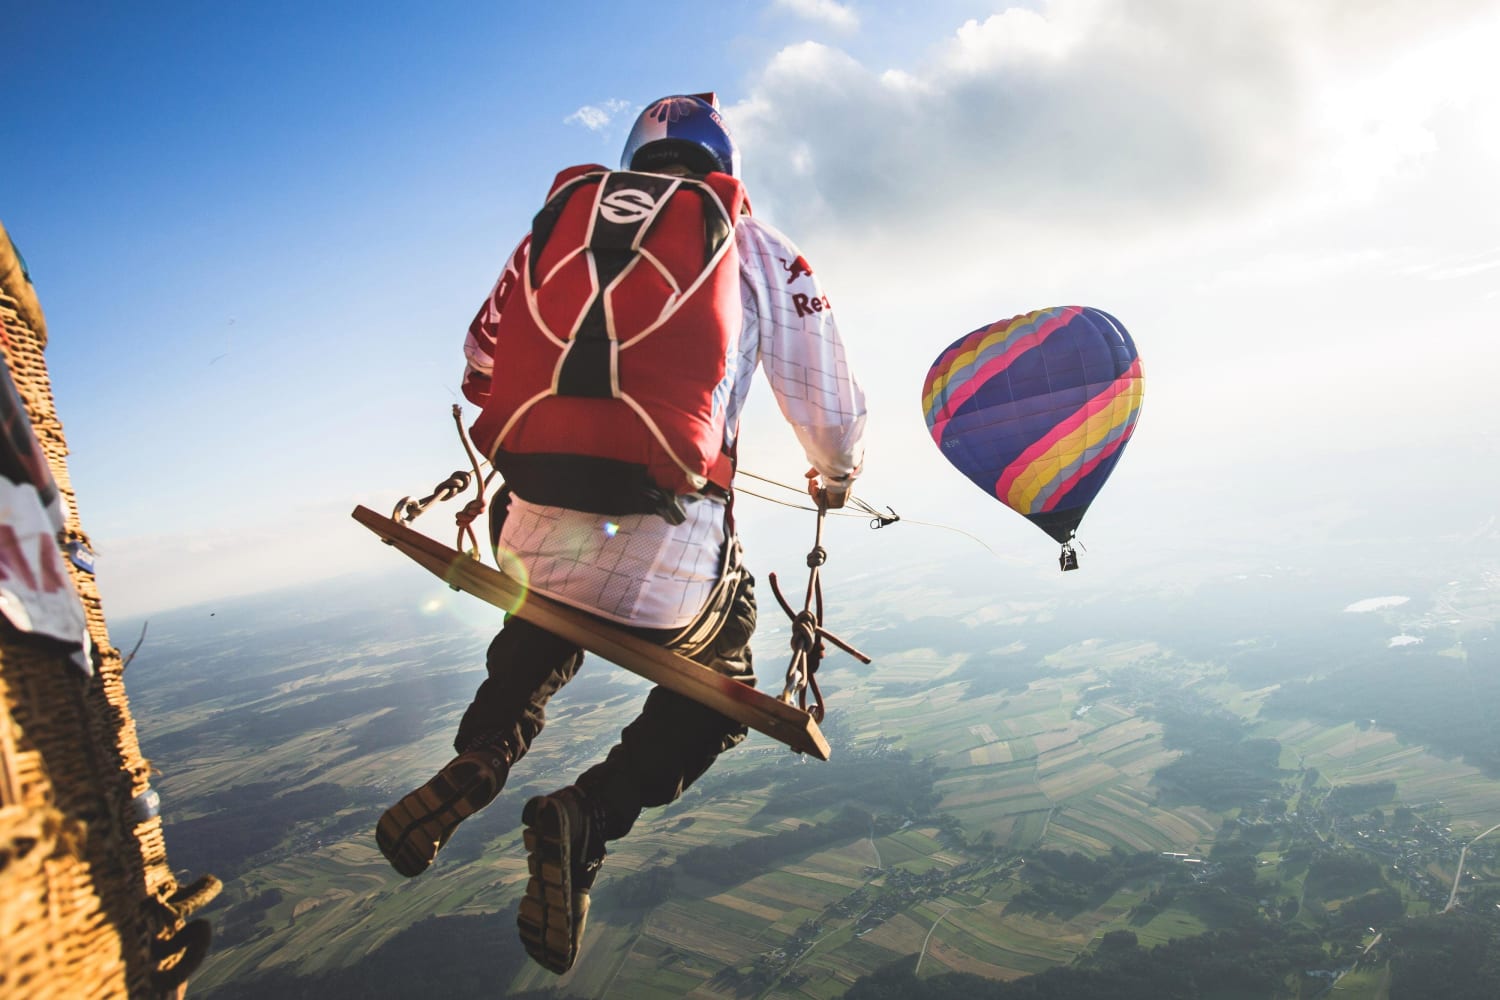 De Gewoon viool Hot air balloon swing 1,800m above the ground *Video*